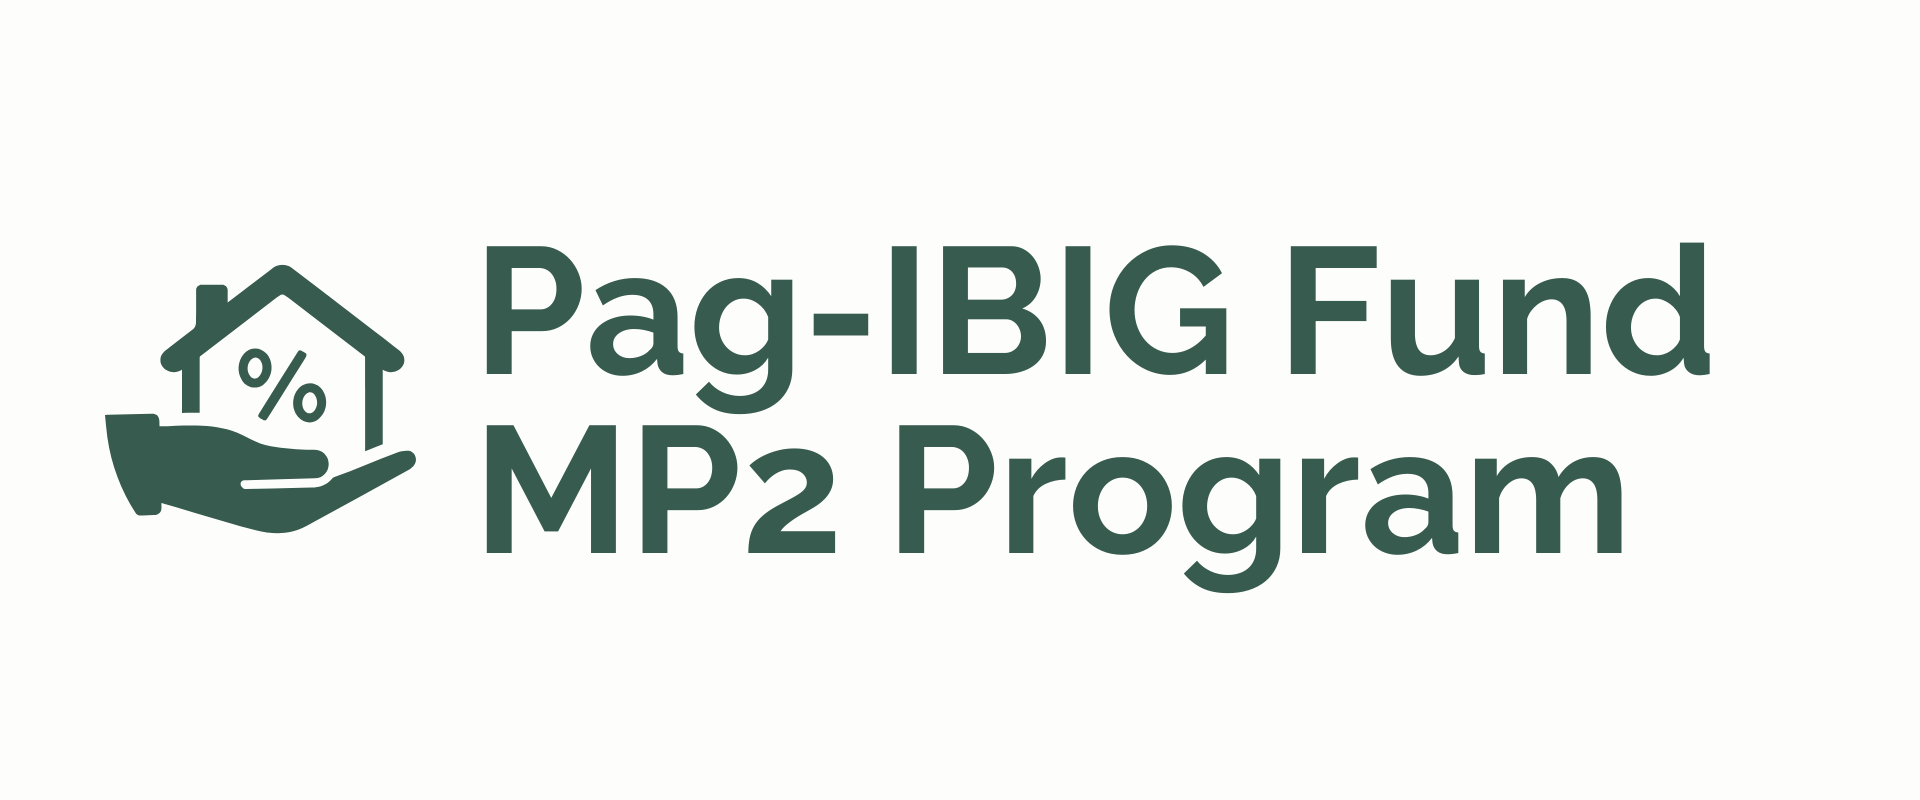 Pag-IBIG Fund MP2 Program investments -diarynigracia